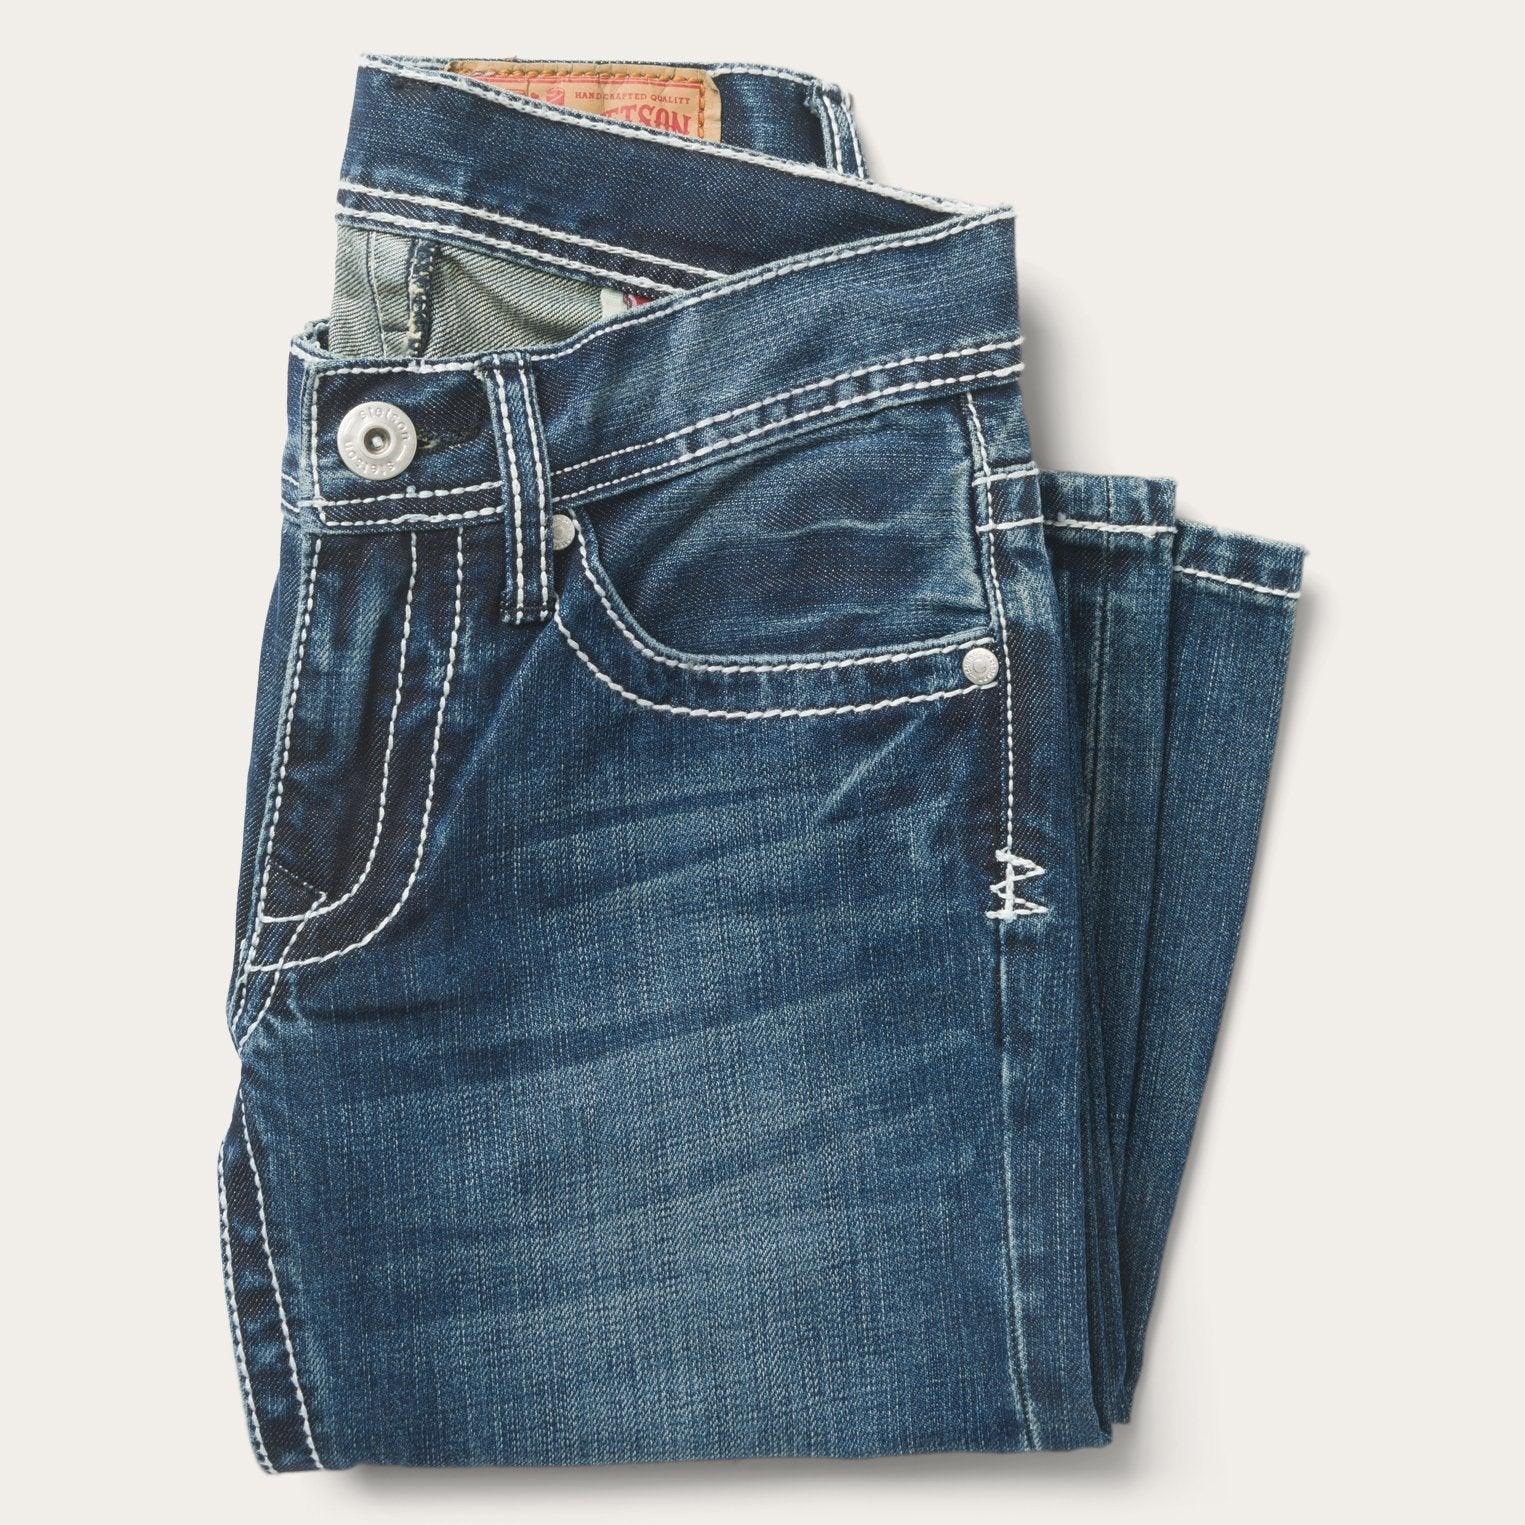 Stetson 1014 Fit Destructed "W" Pocket Jeans - Flyclothing LLC